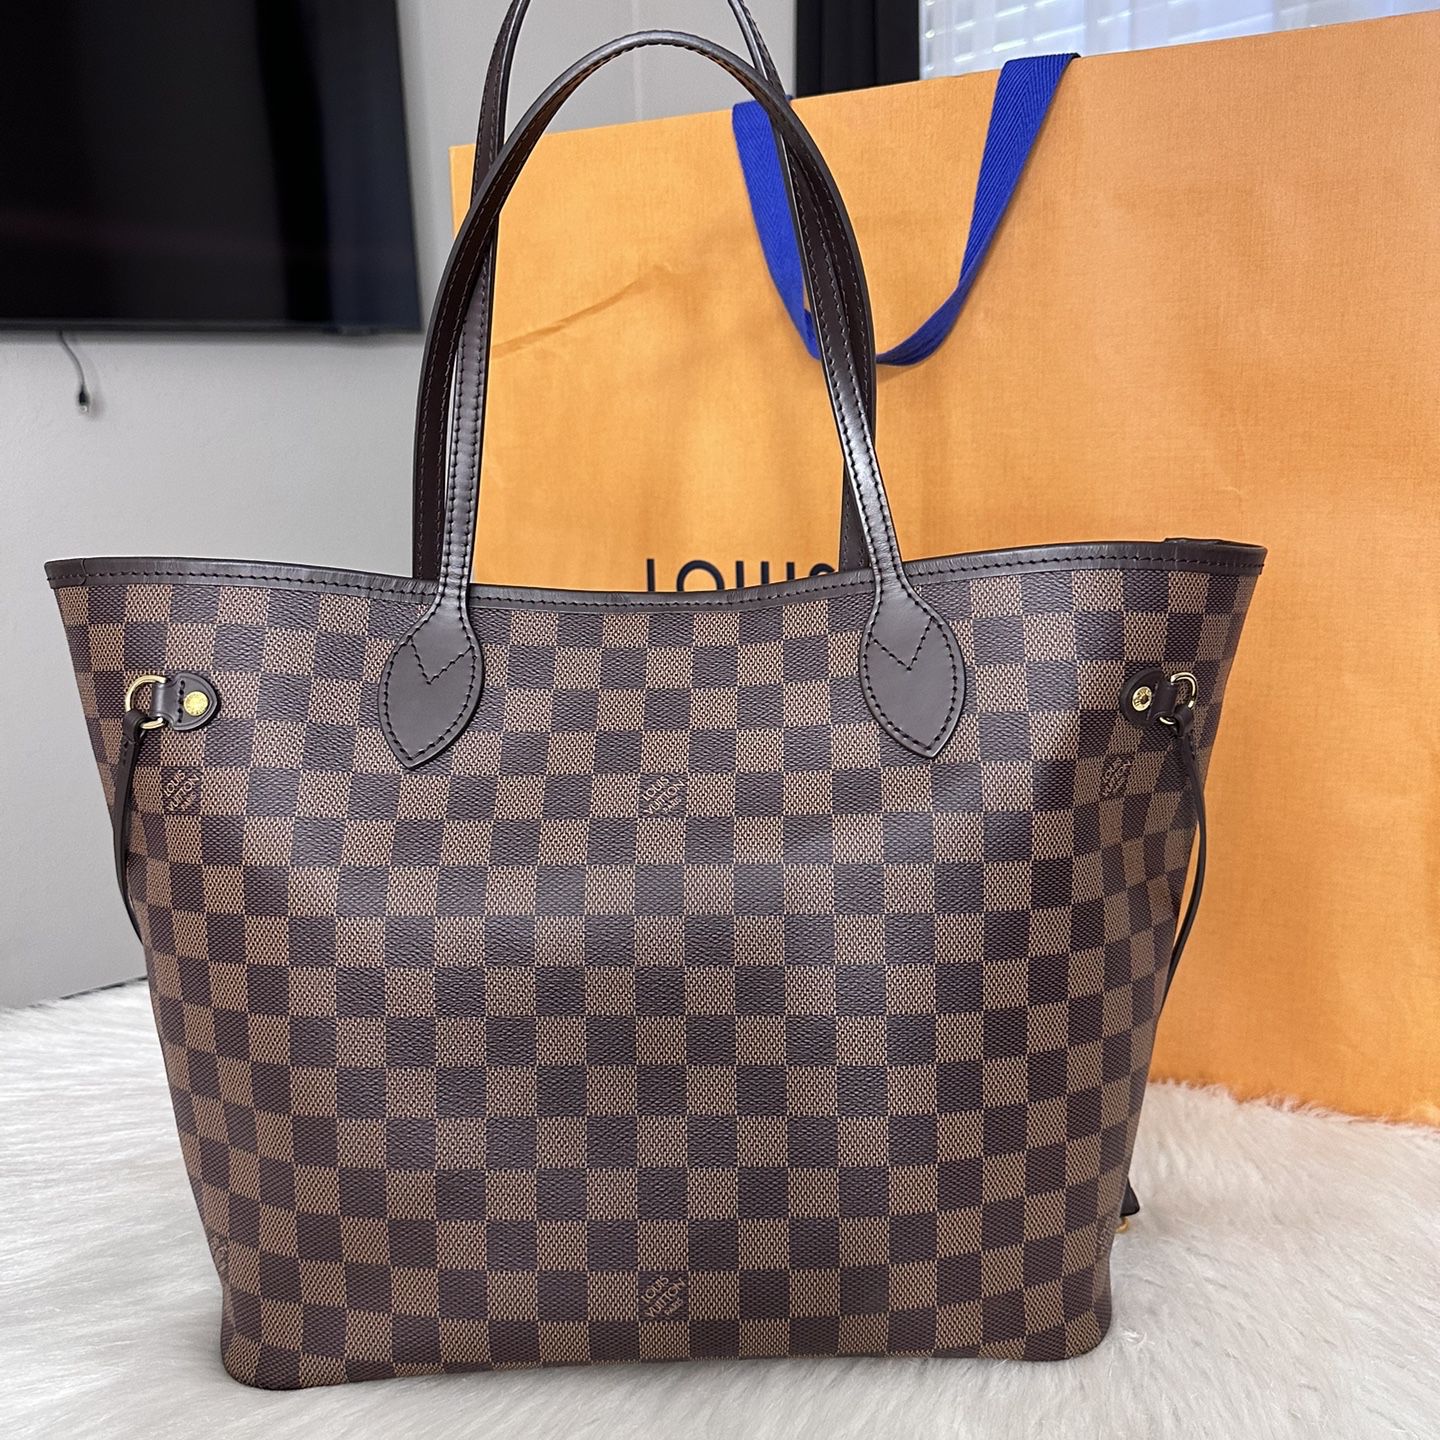 Louis Vuitton Neverfull Handbags for sale in Dallas, Texas